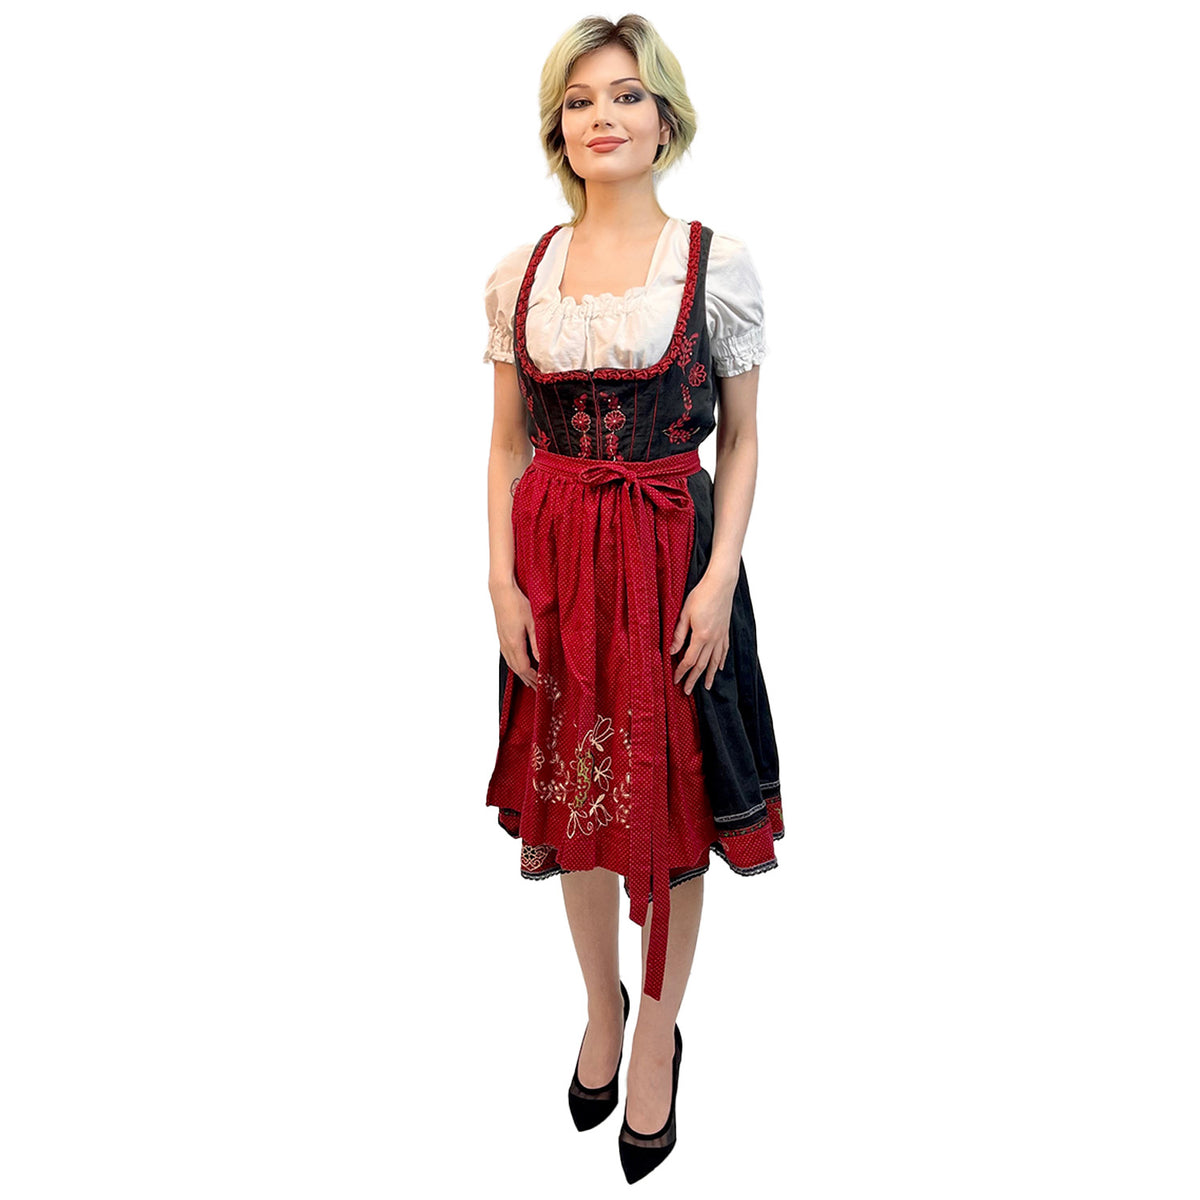 Authentic German Women Red Dirndl Adult Costume